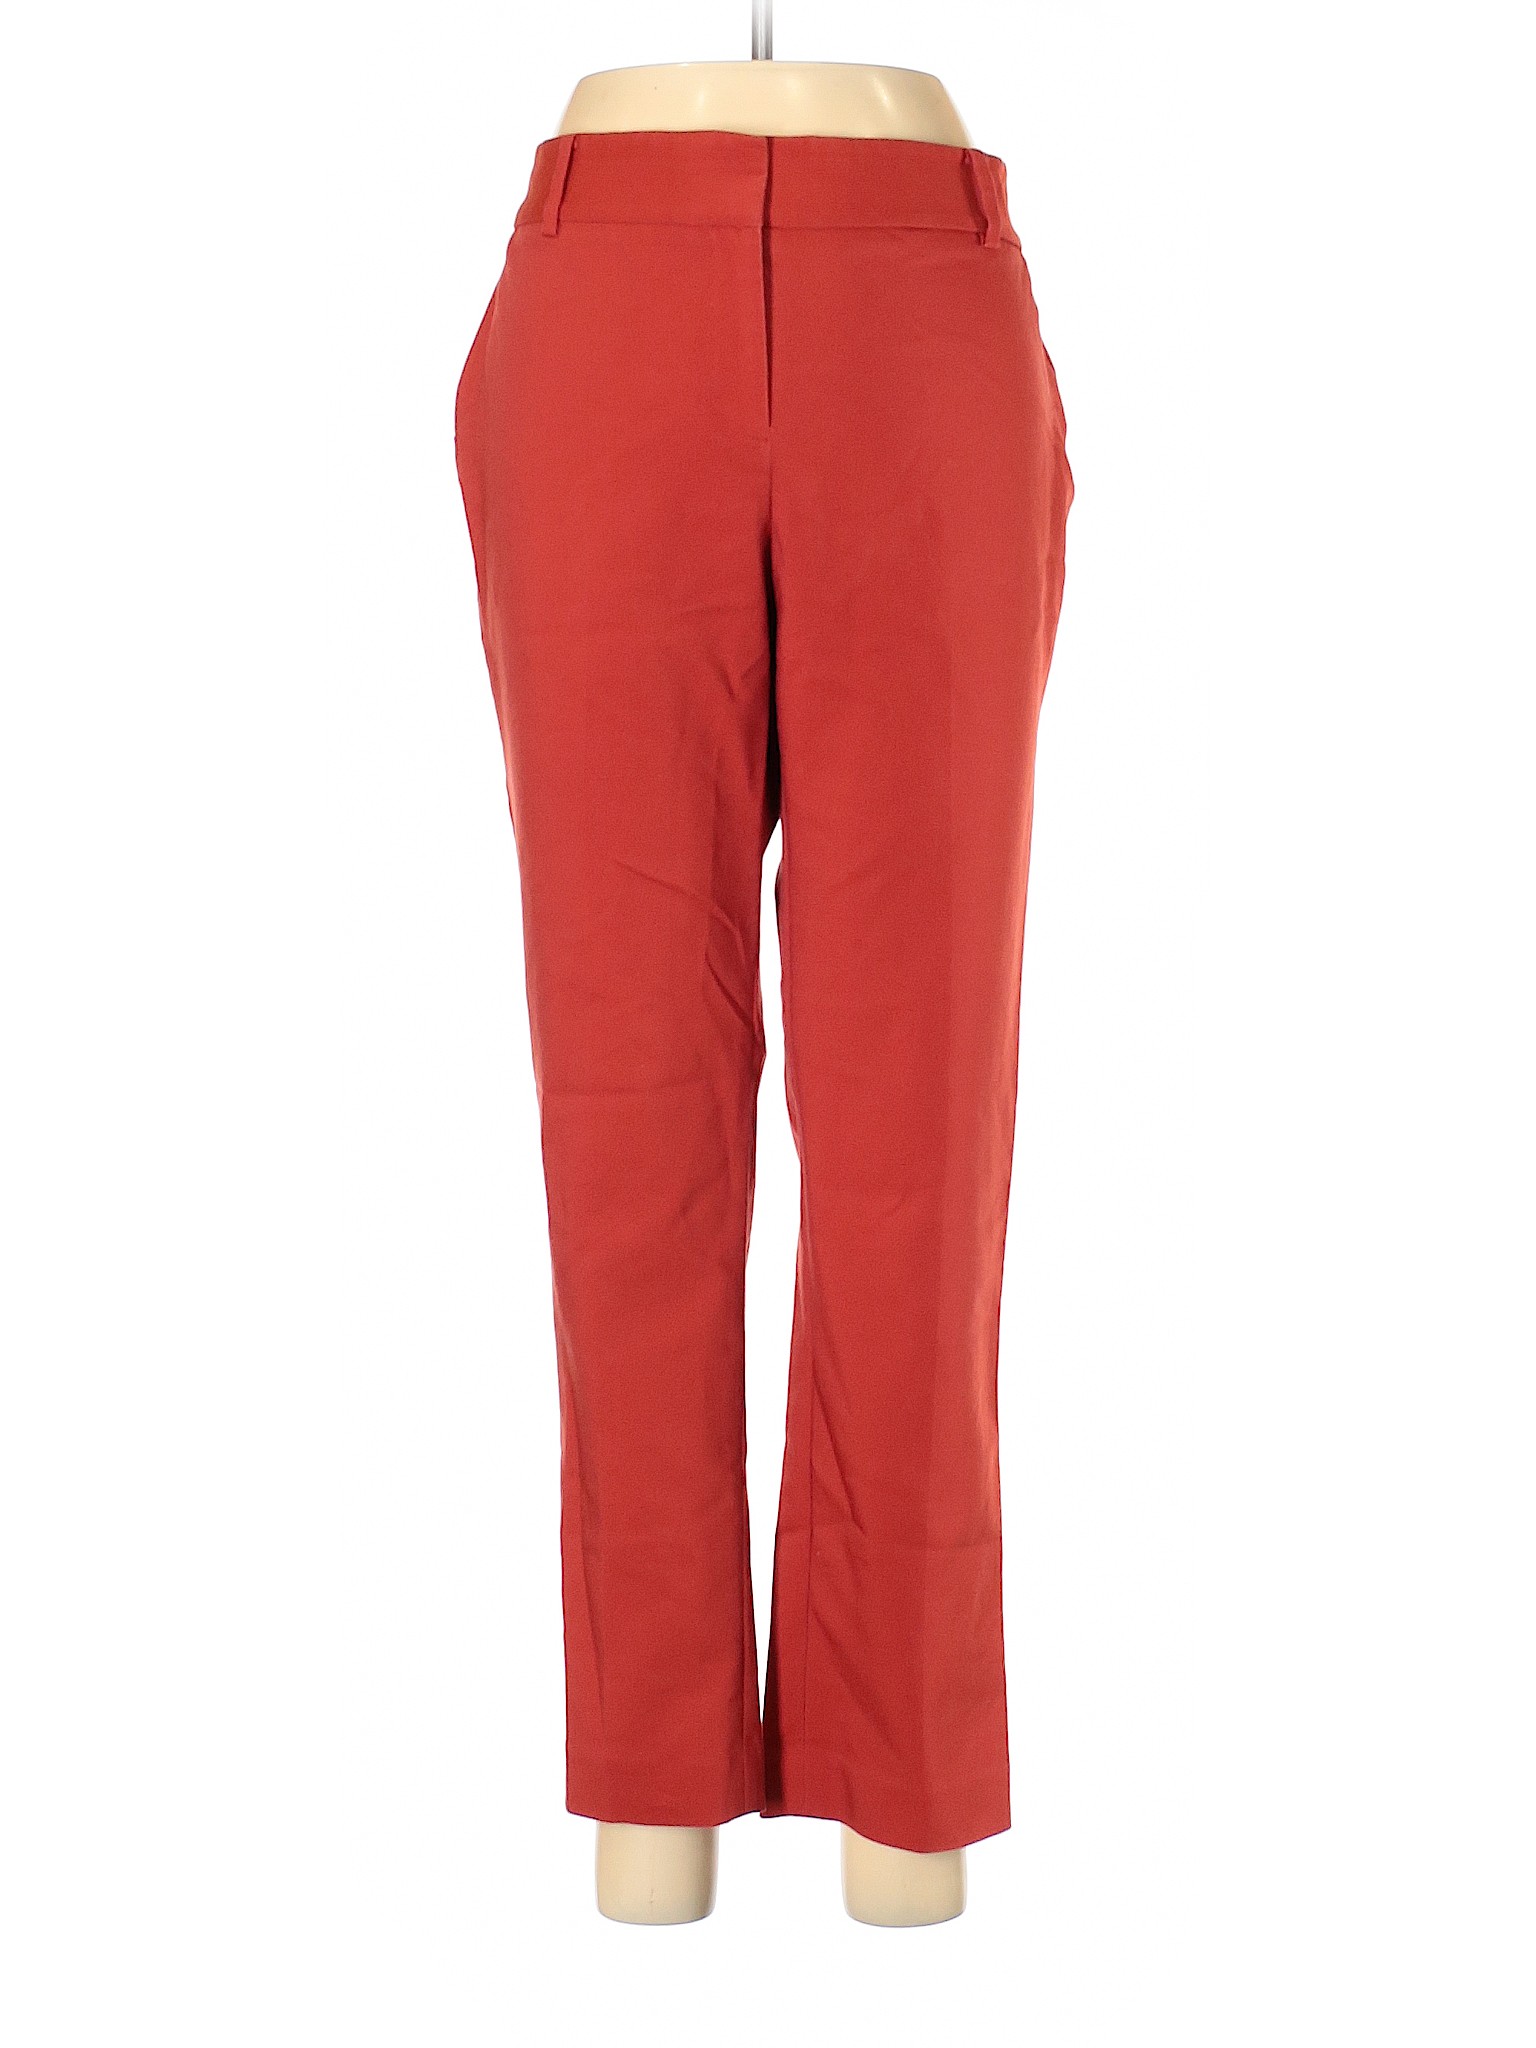 Chaus Women Red Dress Pants 8 | eBay